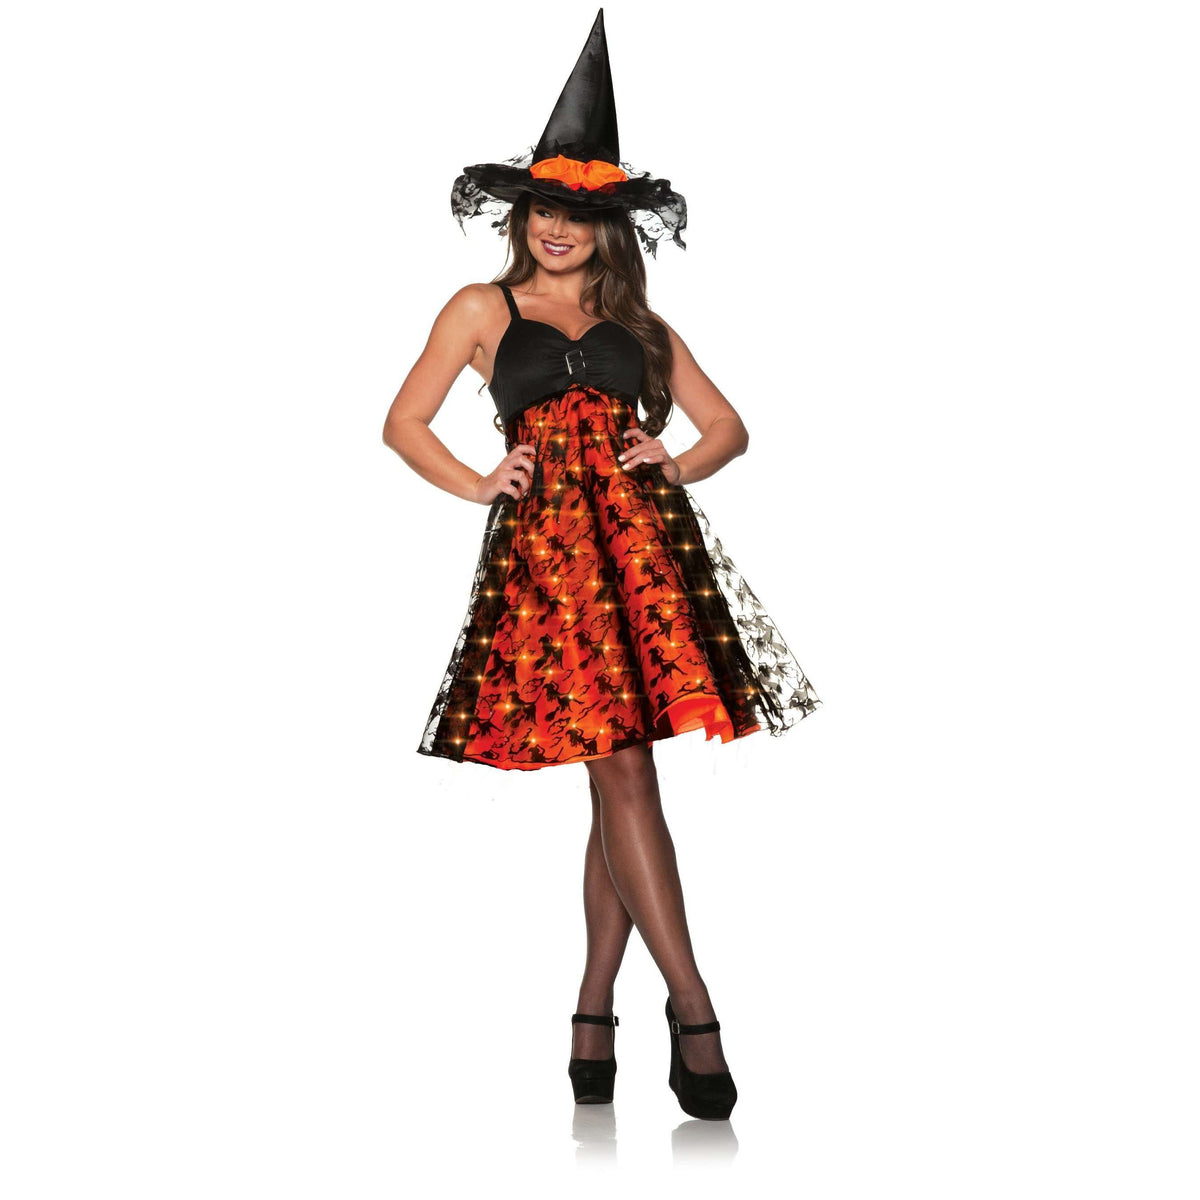 Bobbity Black & Orange Witch Light Up Skirt Women's Adult Costume w/ Witch's Hat